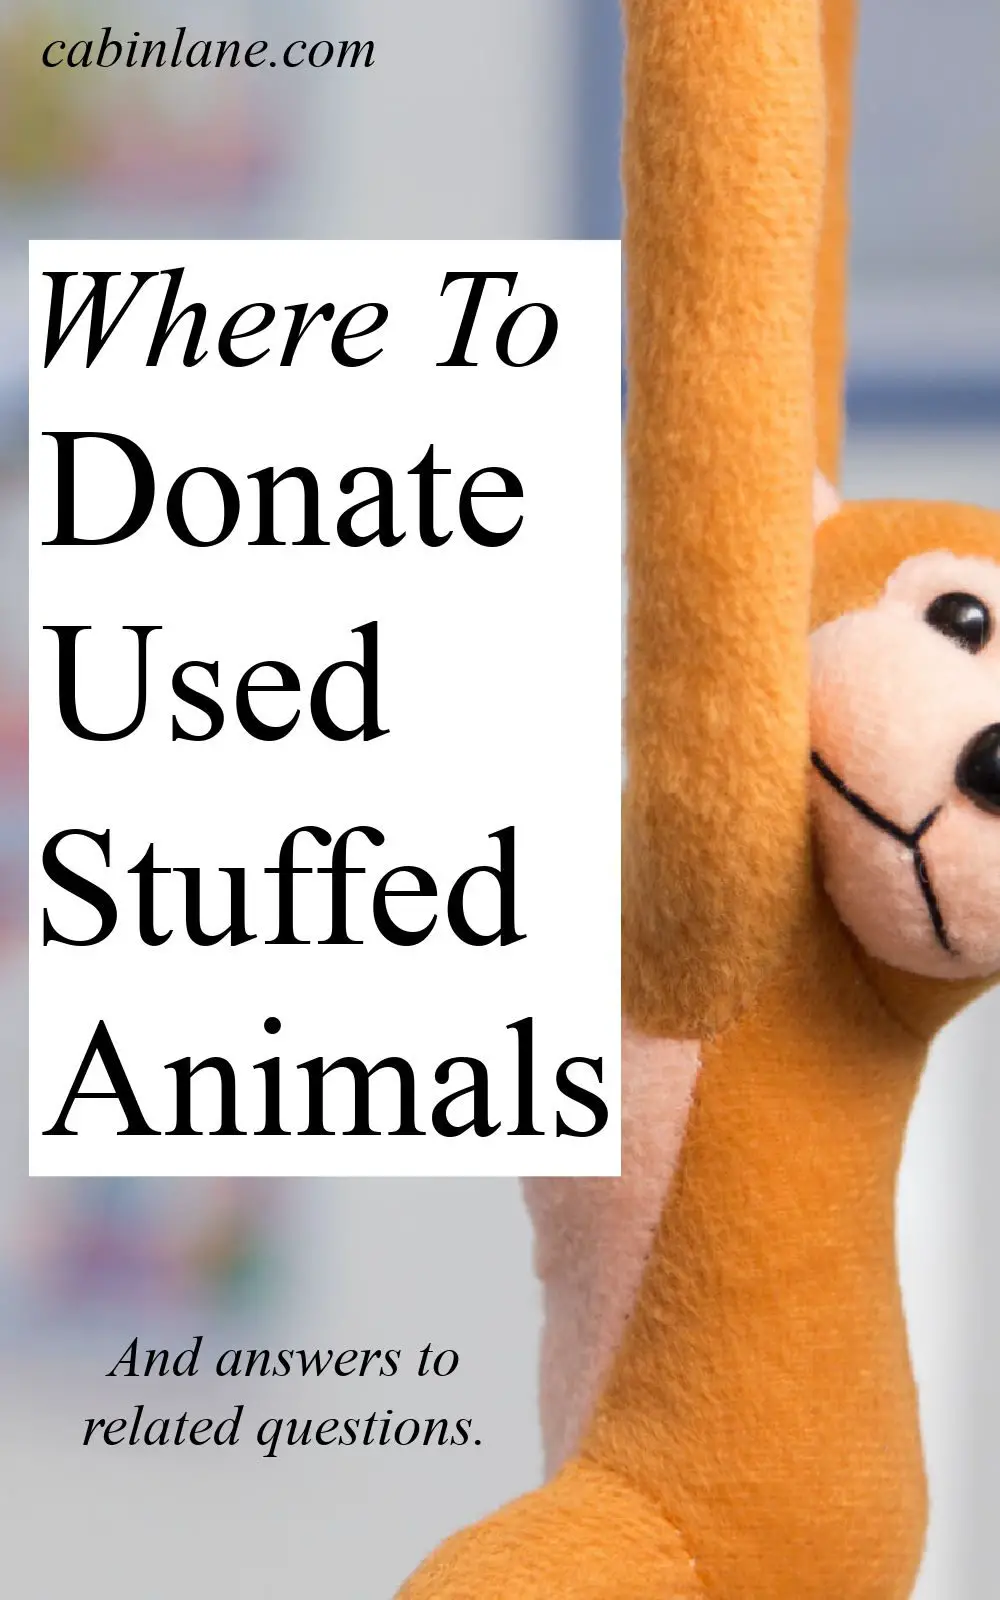 Where to Donate Used Stuffed Animals - Cabin Lane